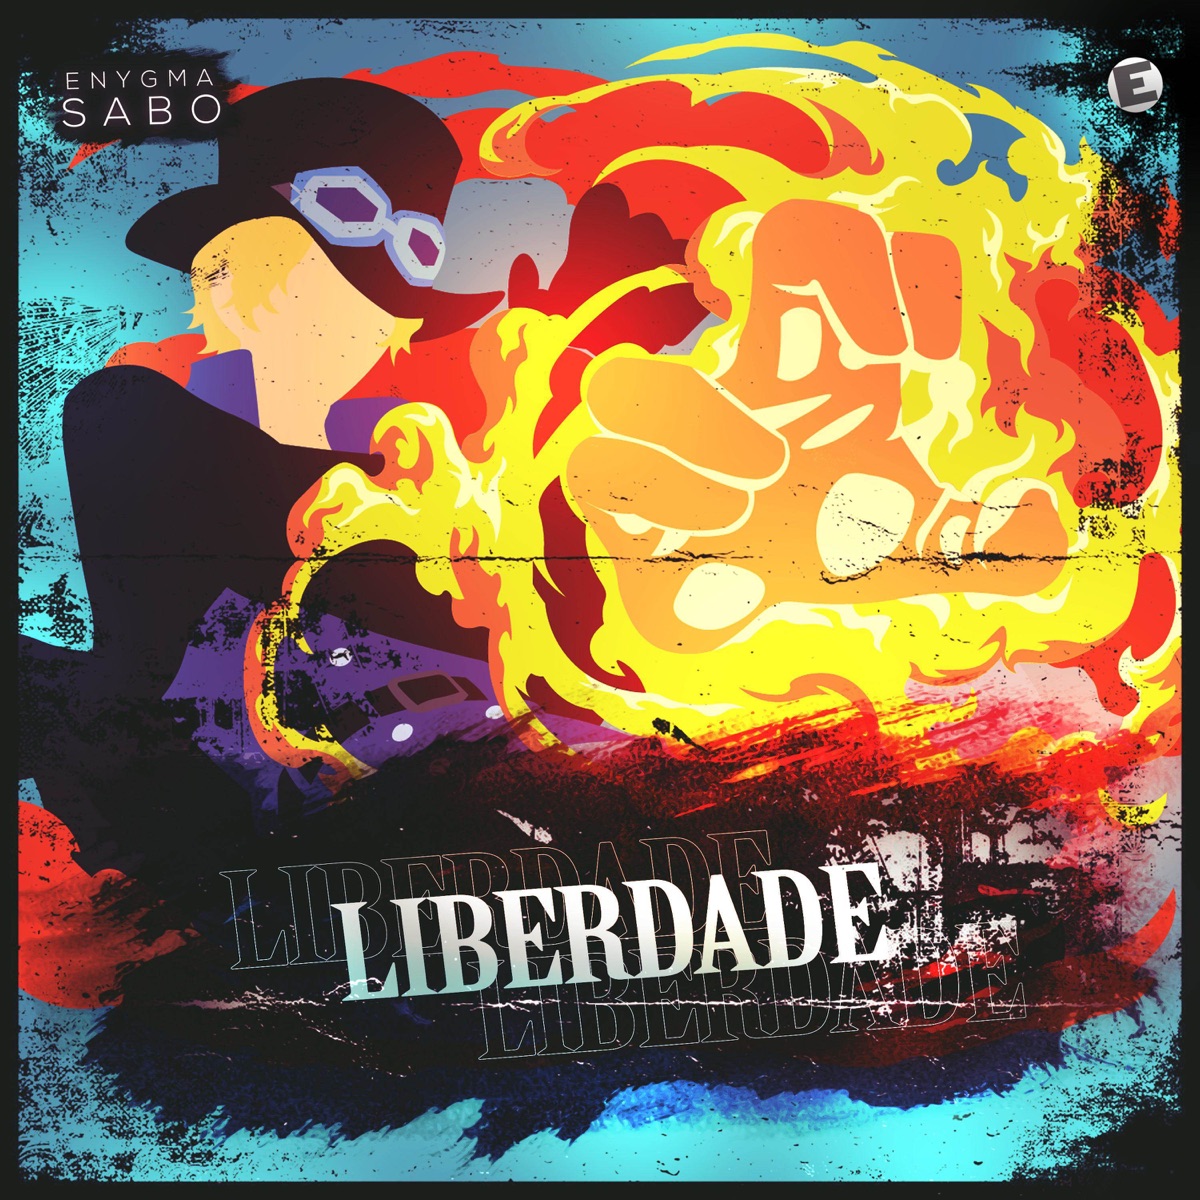 Liberdade (Sabo) - Single - Album by Enygma Rapper - Apple Music